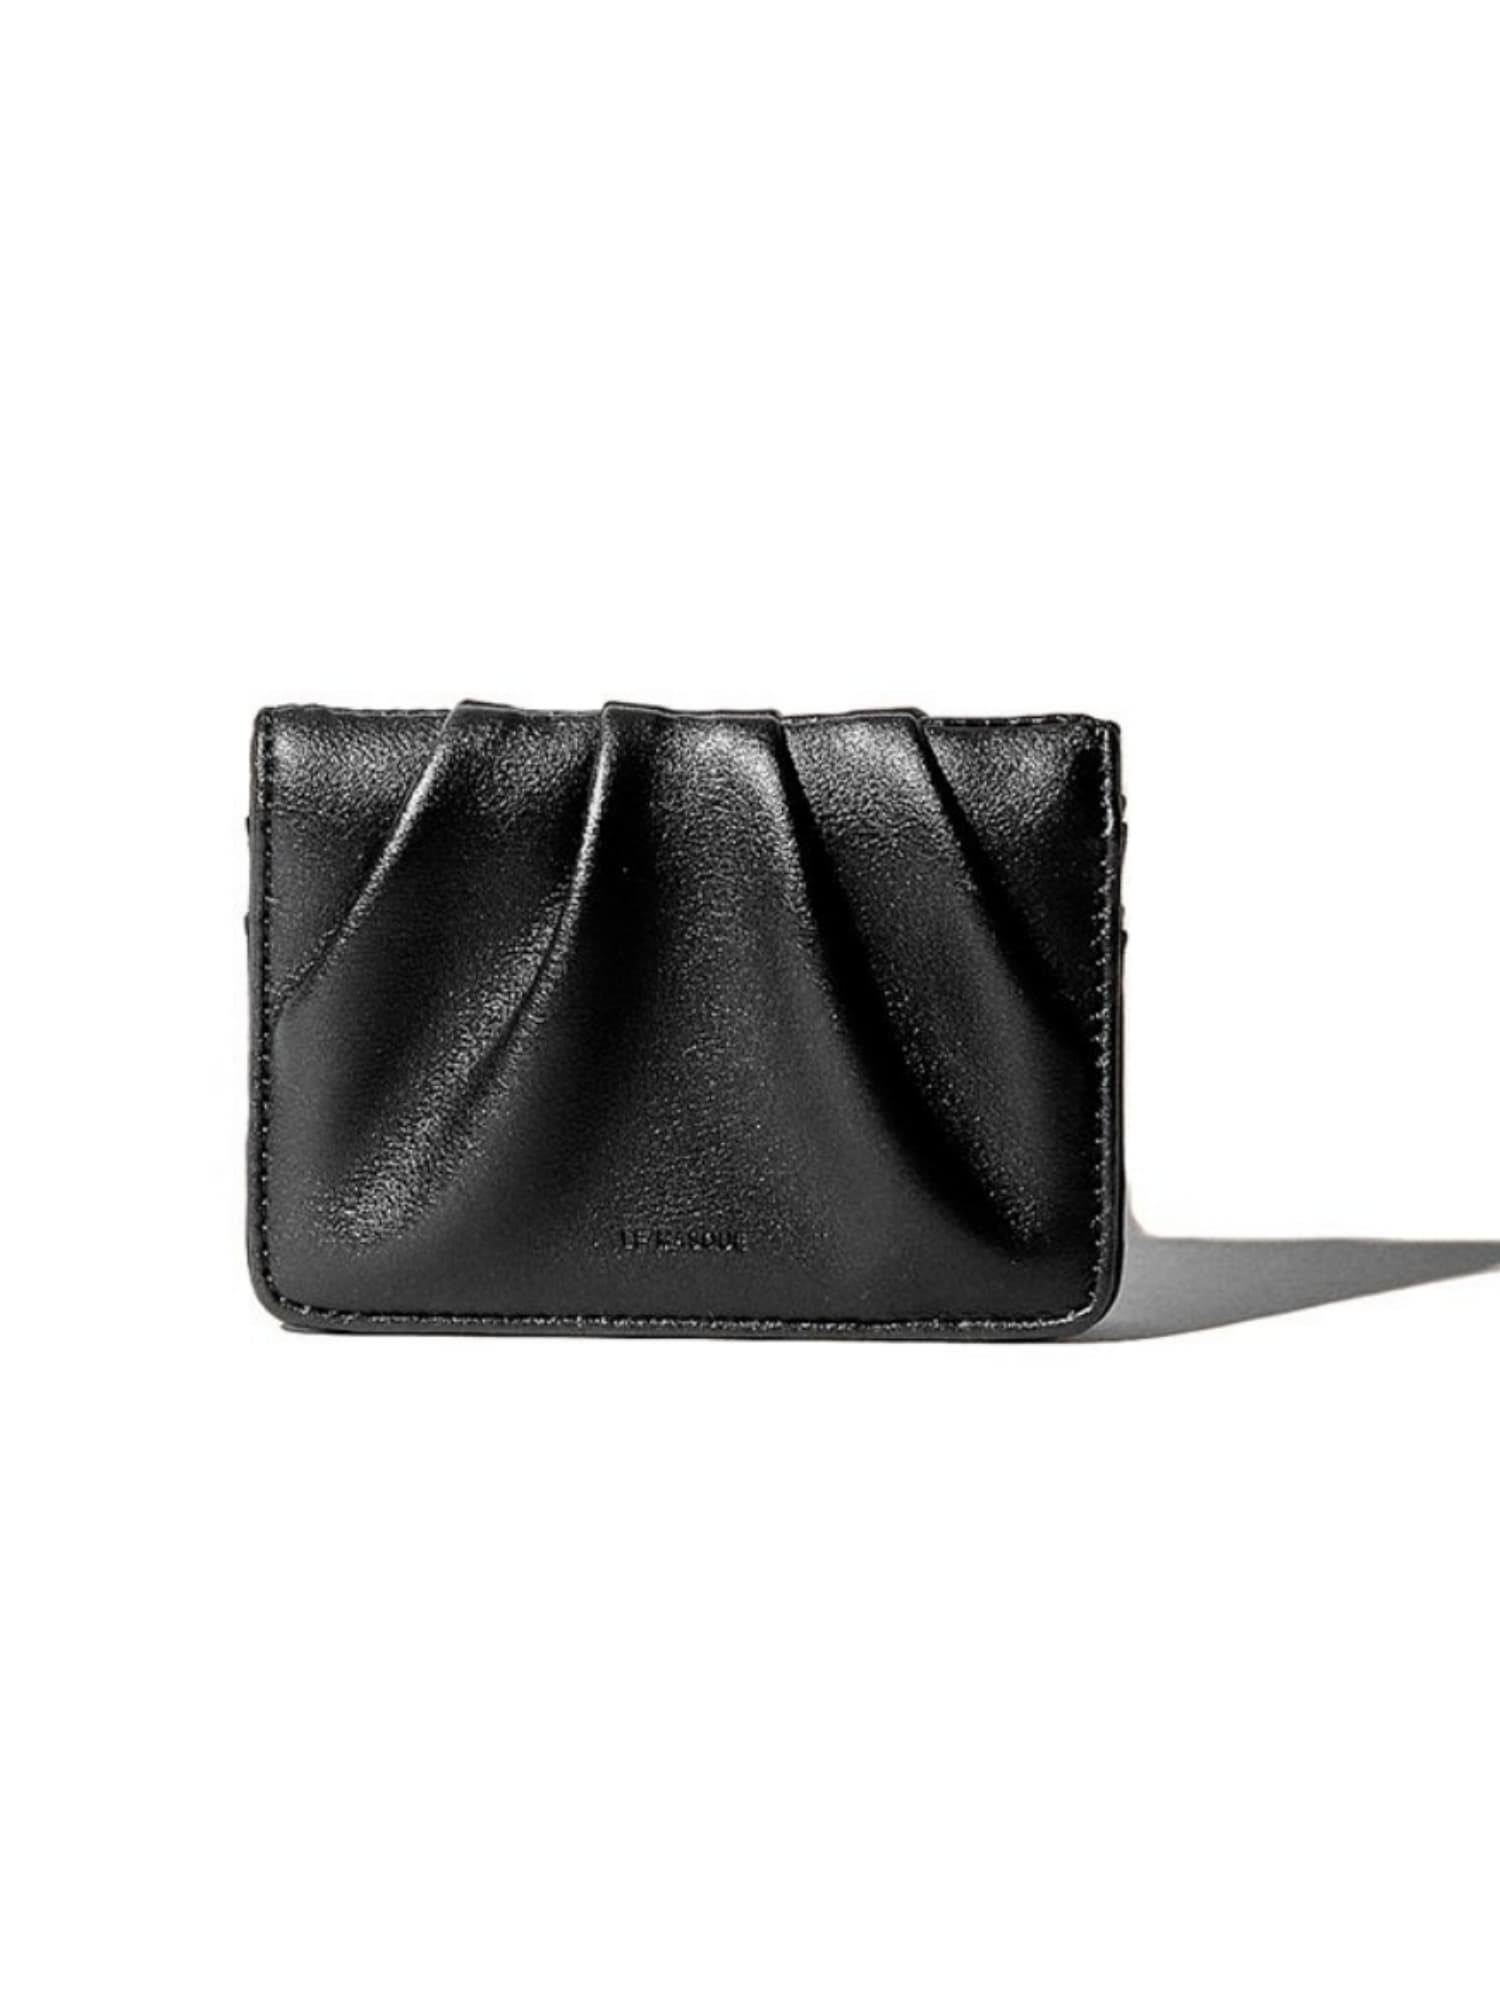 DOUGH Soft Leather Card Case Wallet - Black